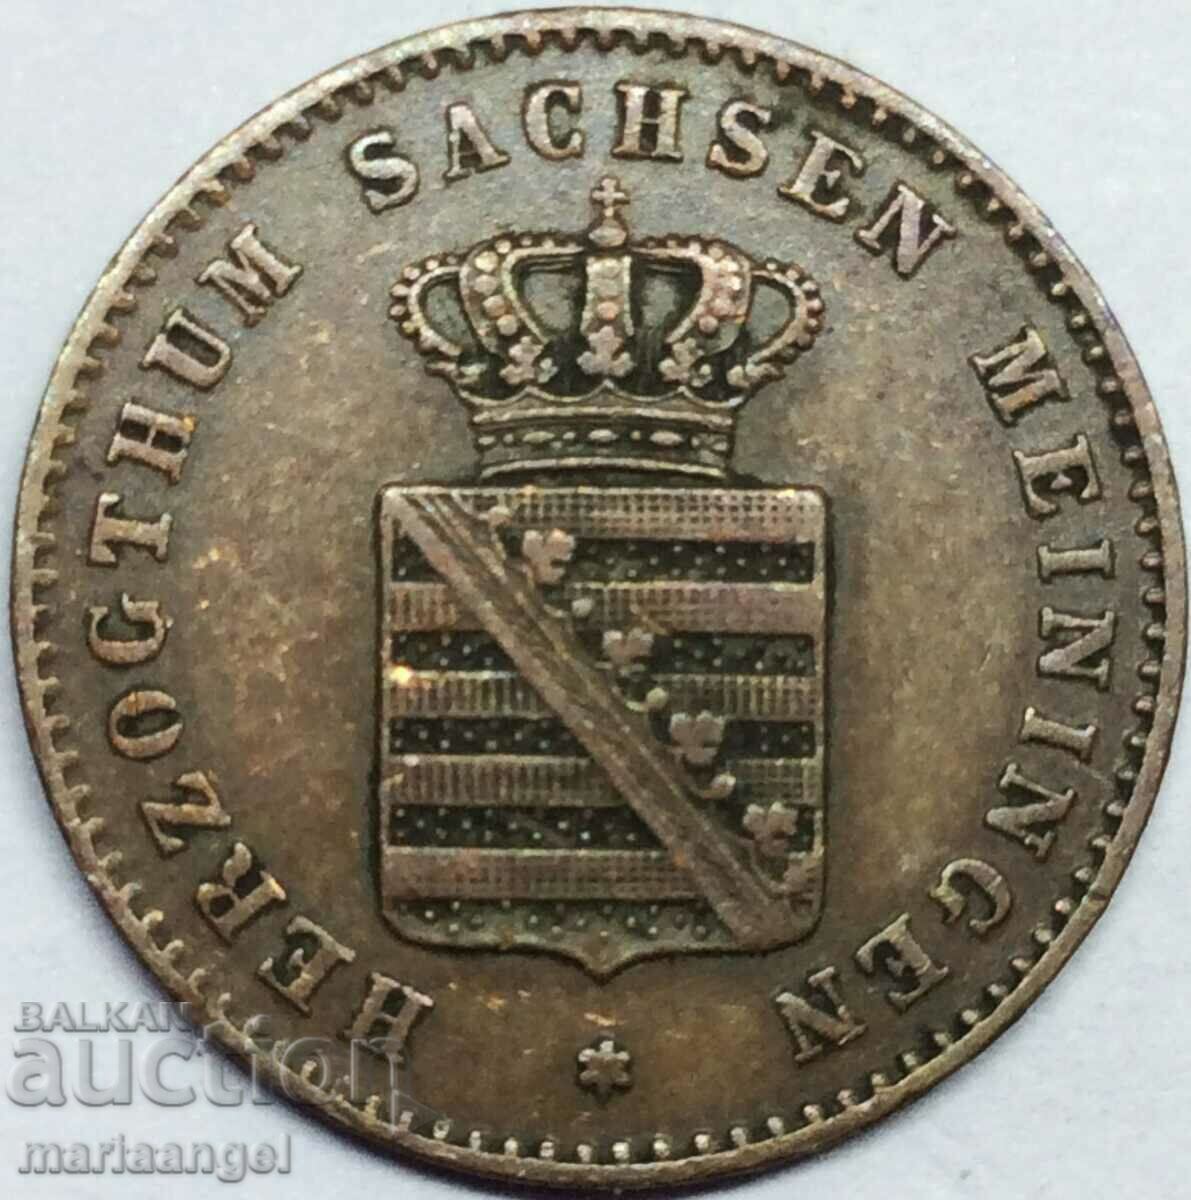 Saxony 2 Pfennig 1865 Germany - quite rare